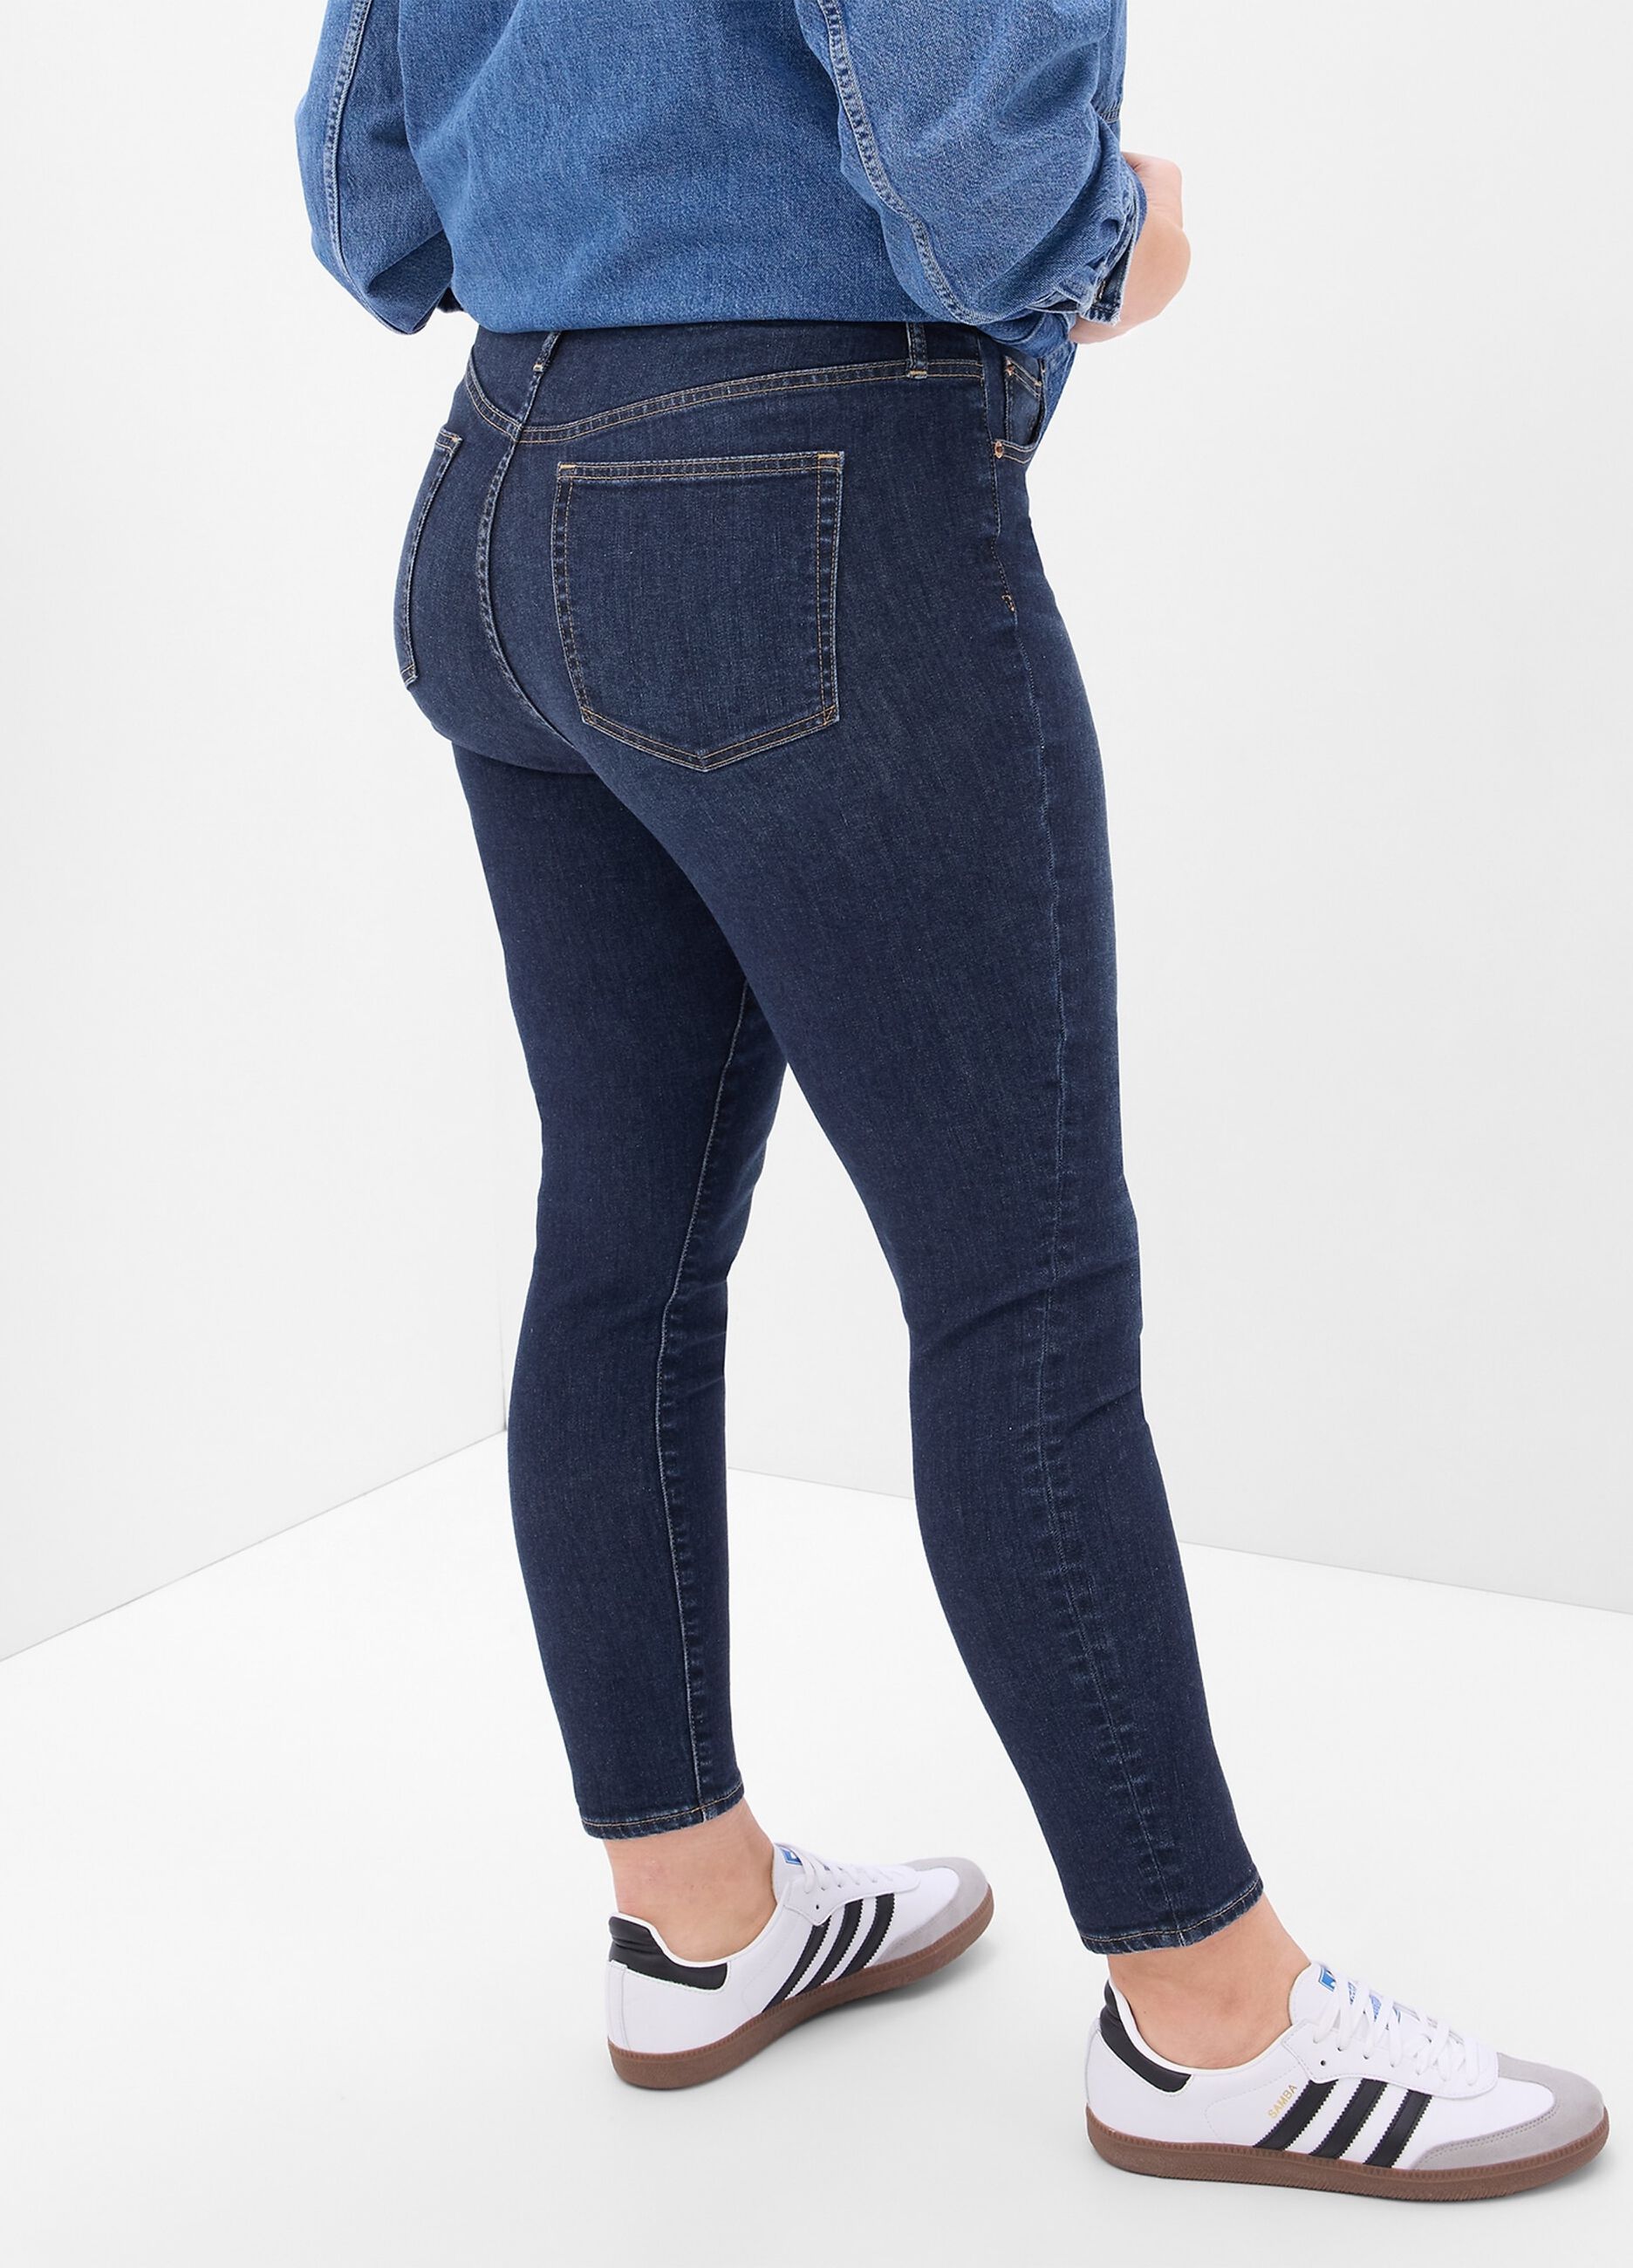 High-waist, skinny fit jeans